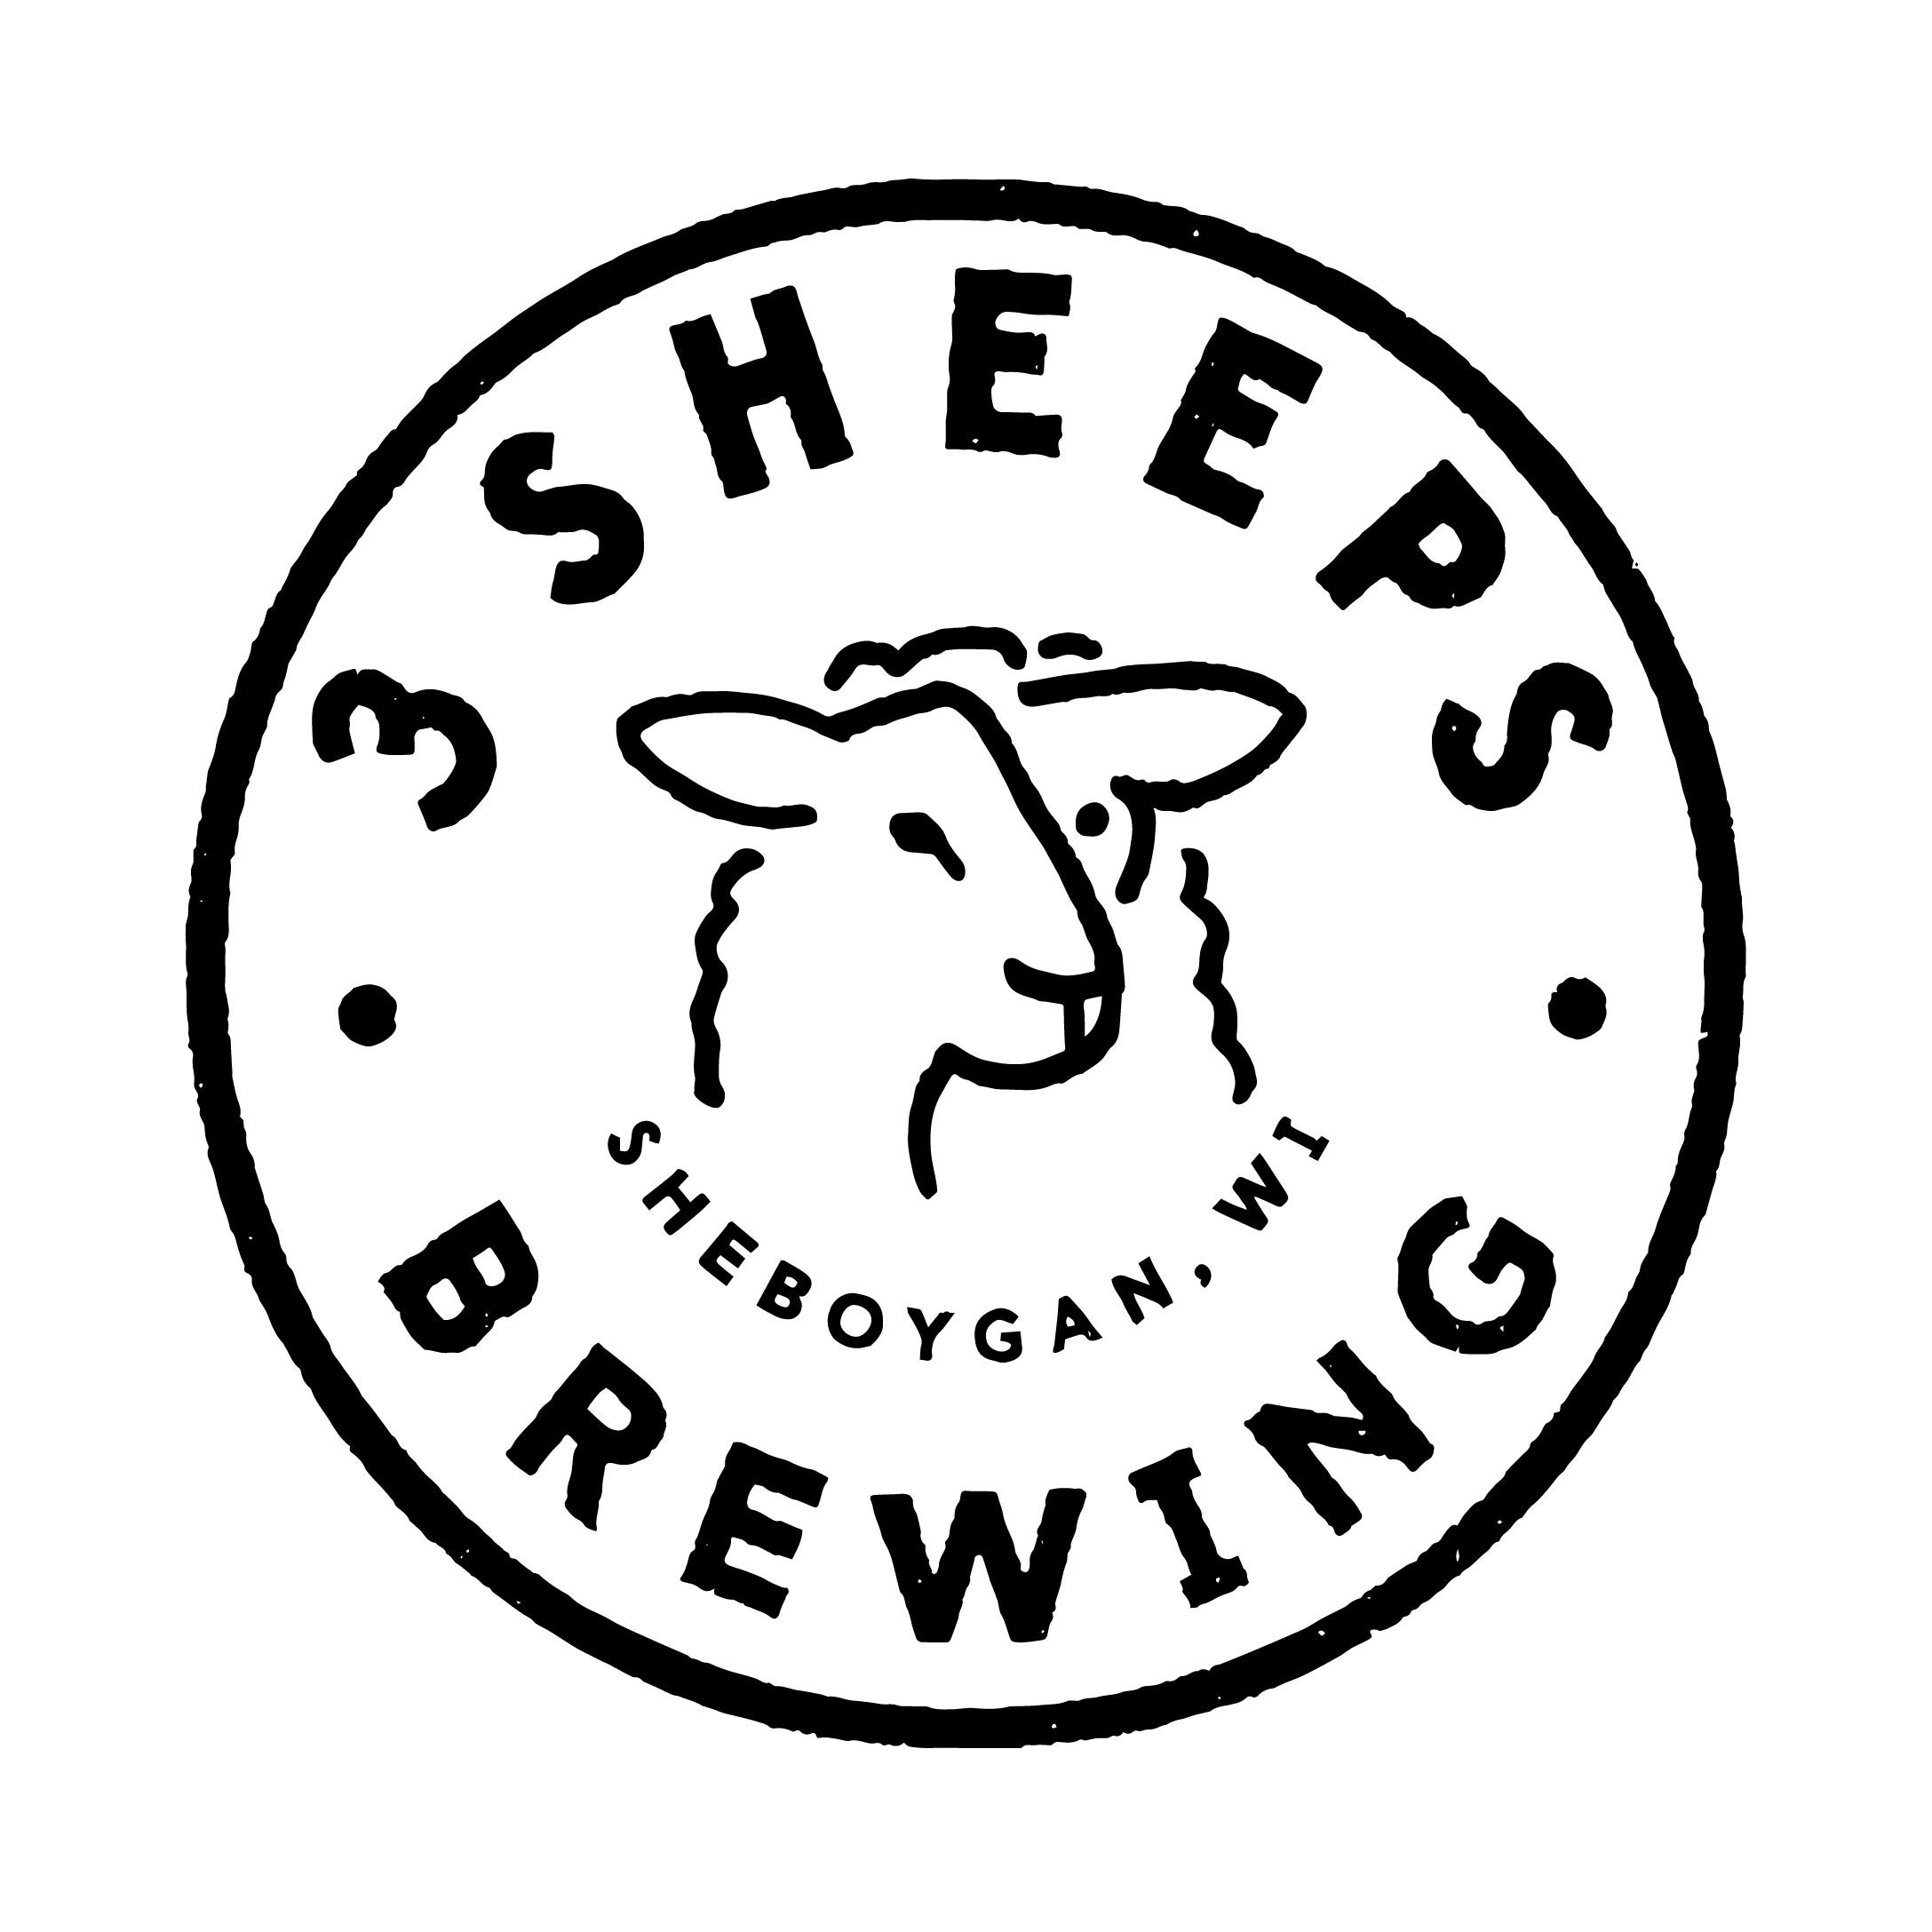 3 Sheeps Brewing Online Shop